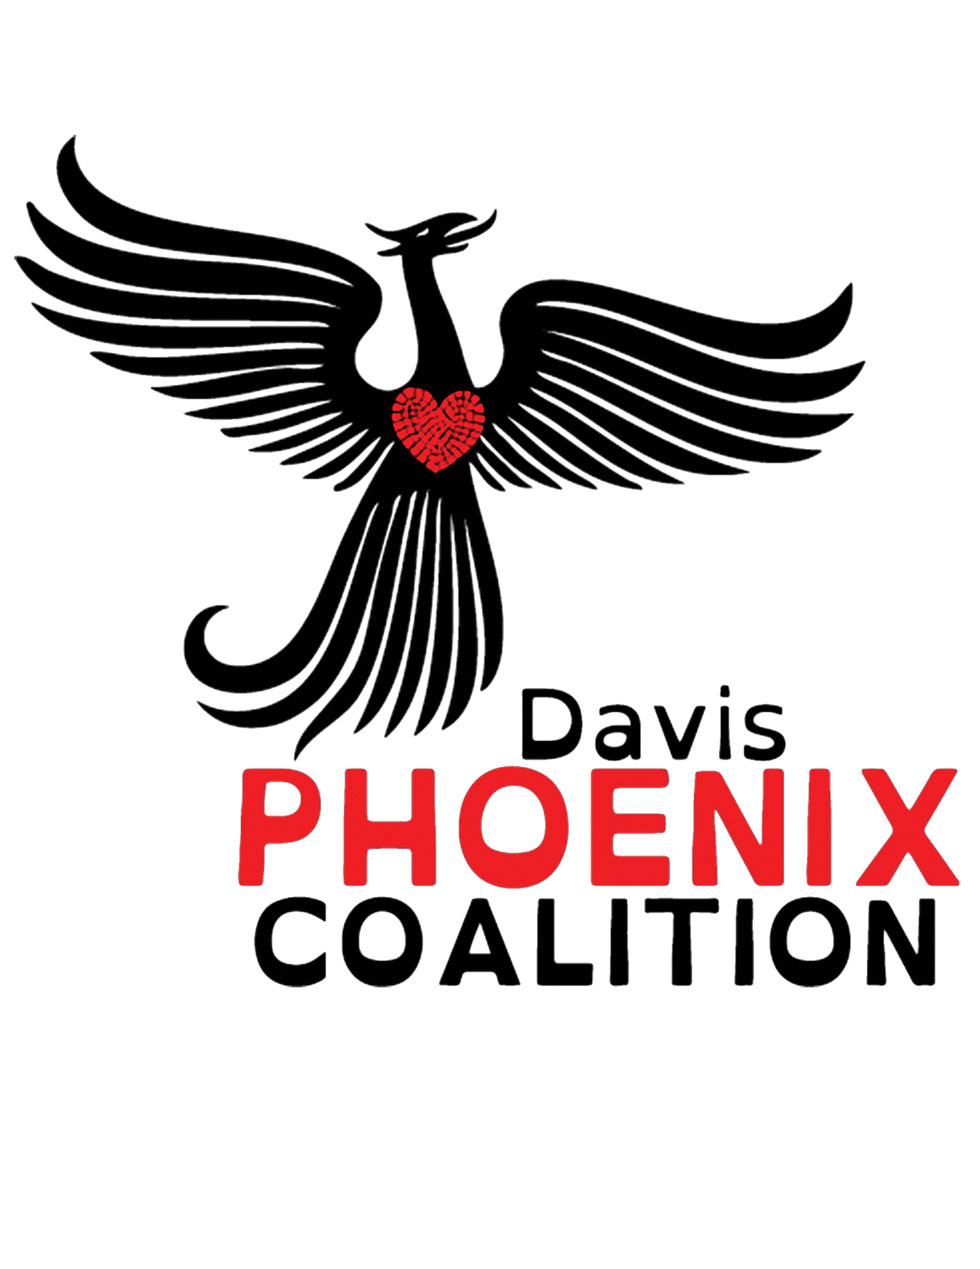 The Davis Phoenix Coalition